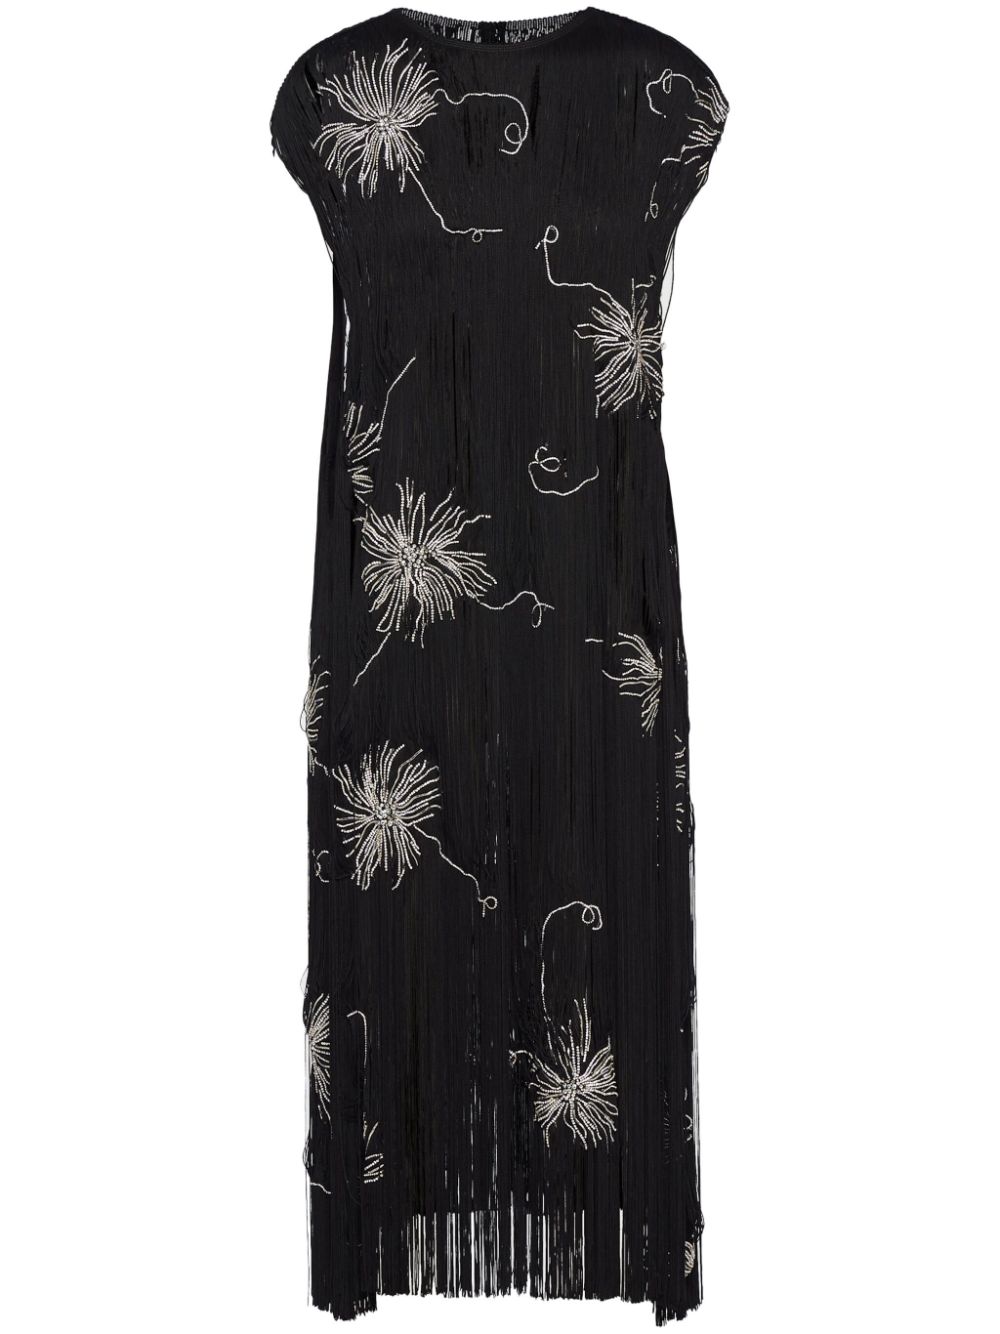 Prada fringed embroidered dress - Black